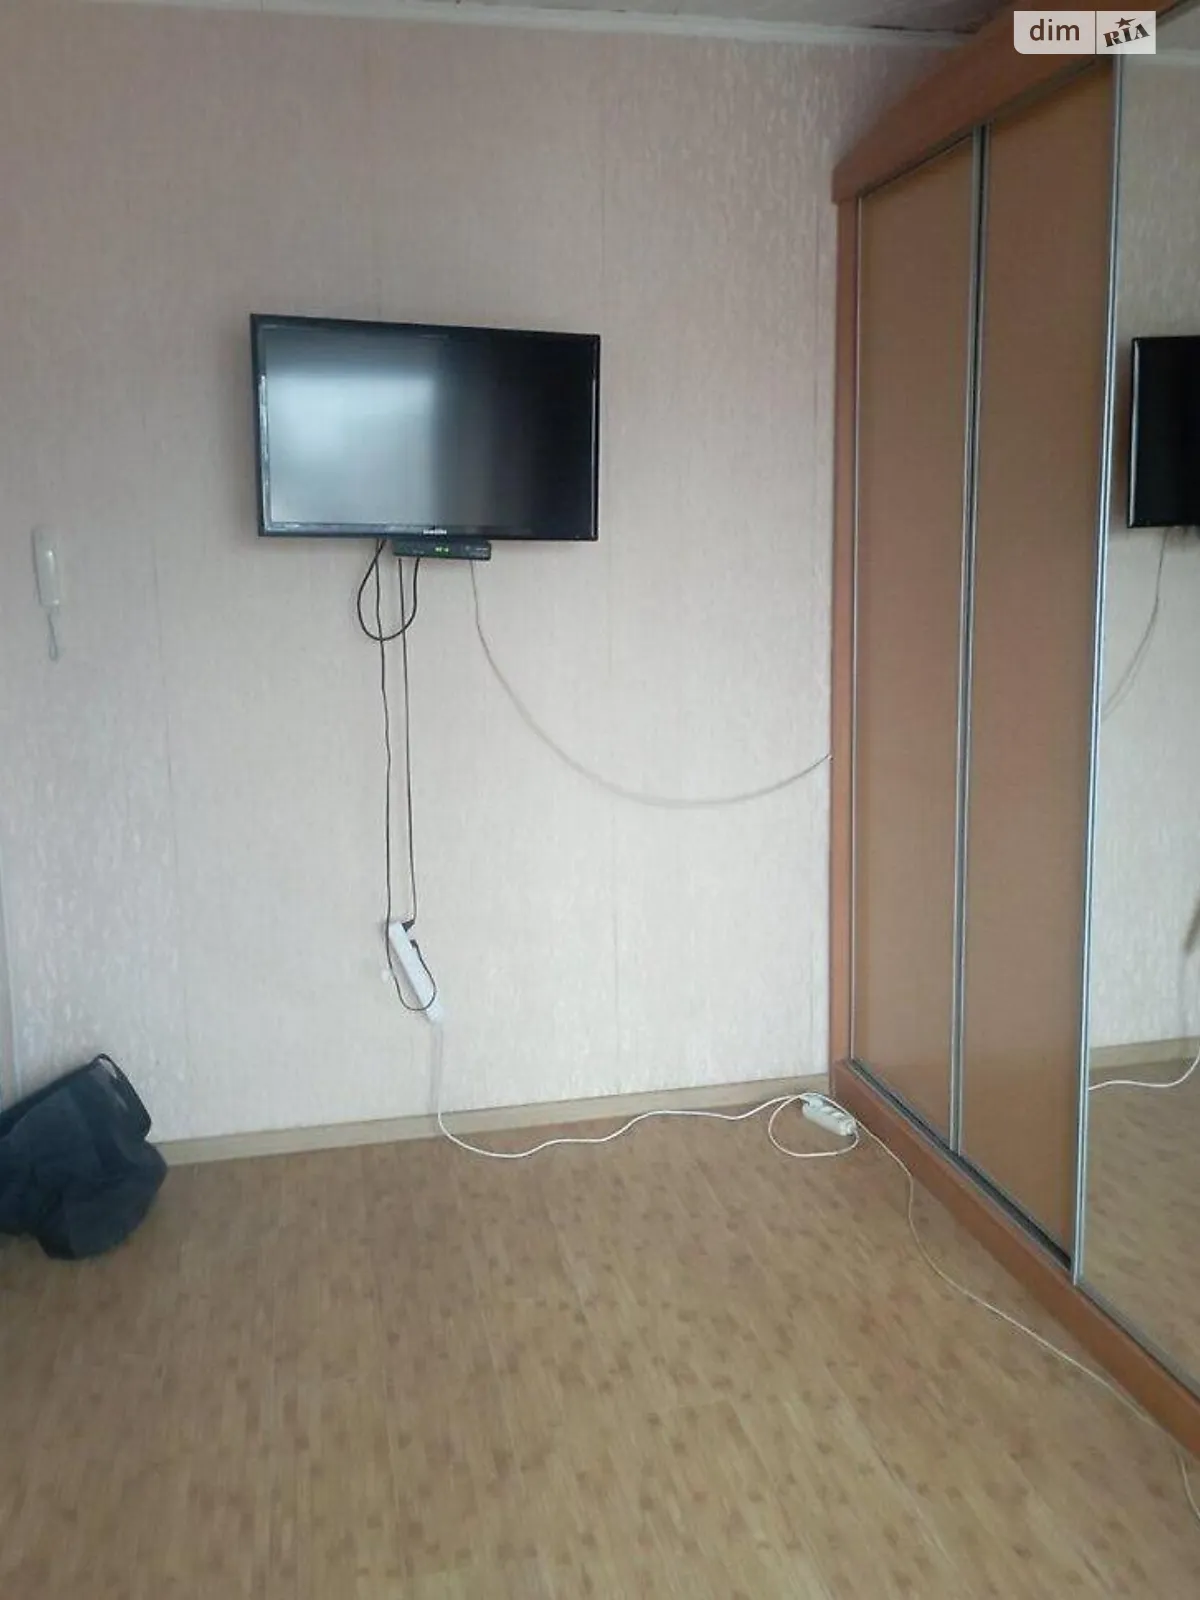 Сдается в аренду комната 18 кв. м в Тернополе - фото 2